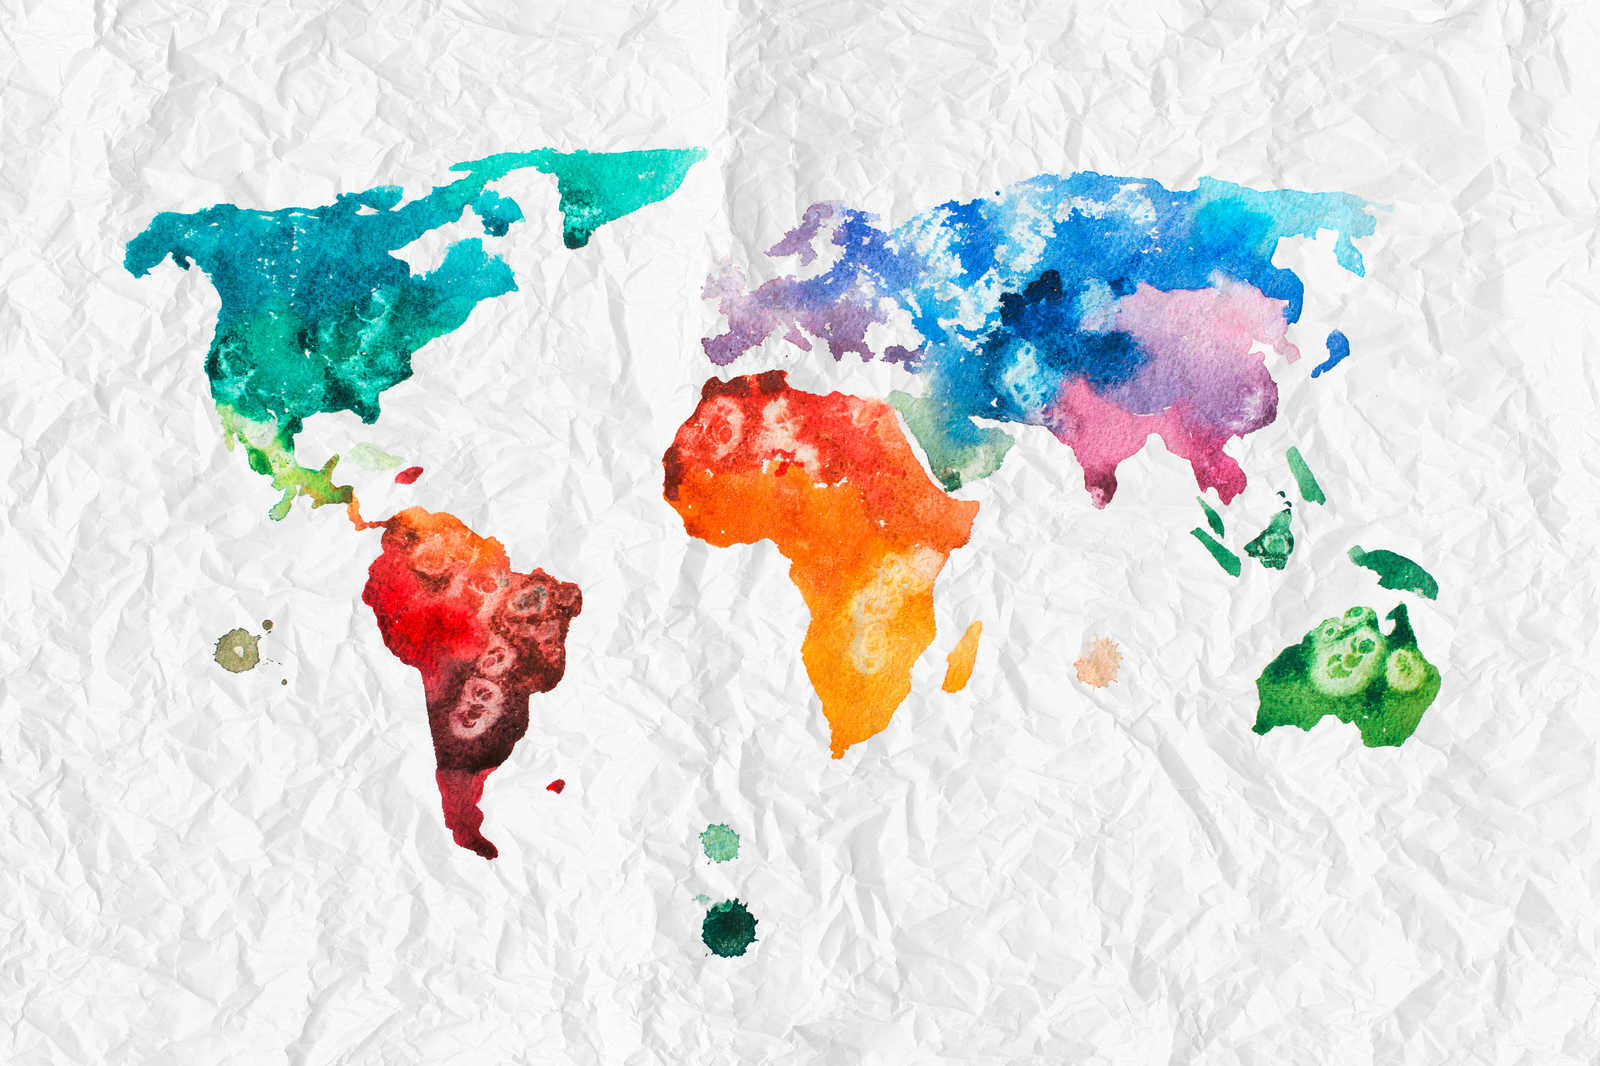             World Map Canvas Watercolour - 0.90 m x 0.60 m
        